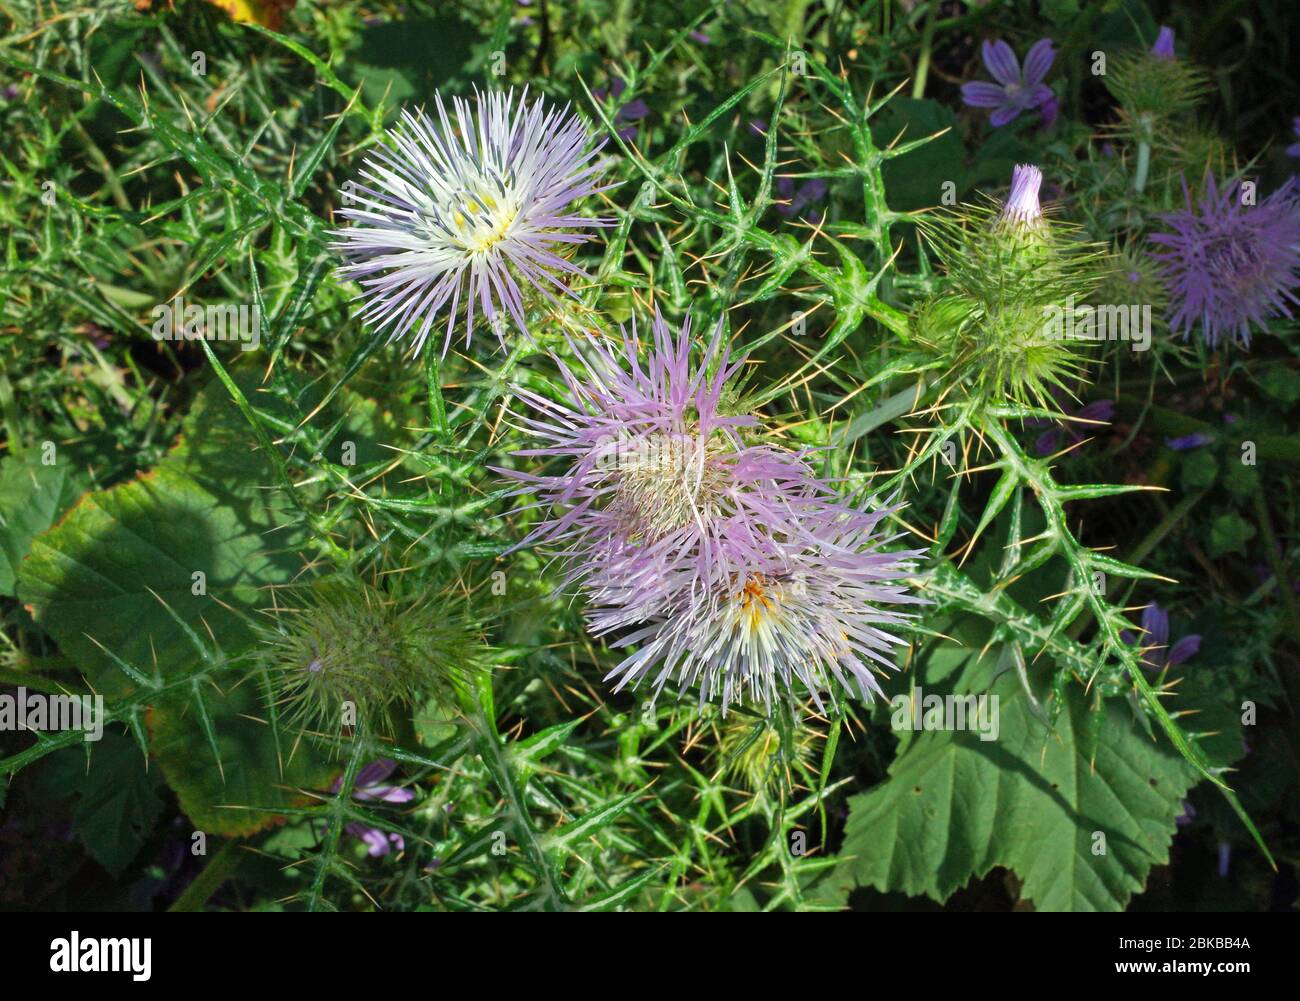 Wild thistle (Galactites tomentosa) flowering close-up Stock Photo